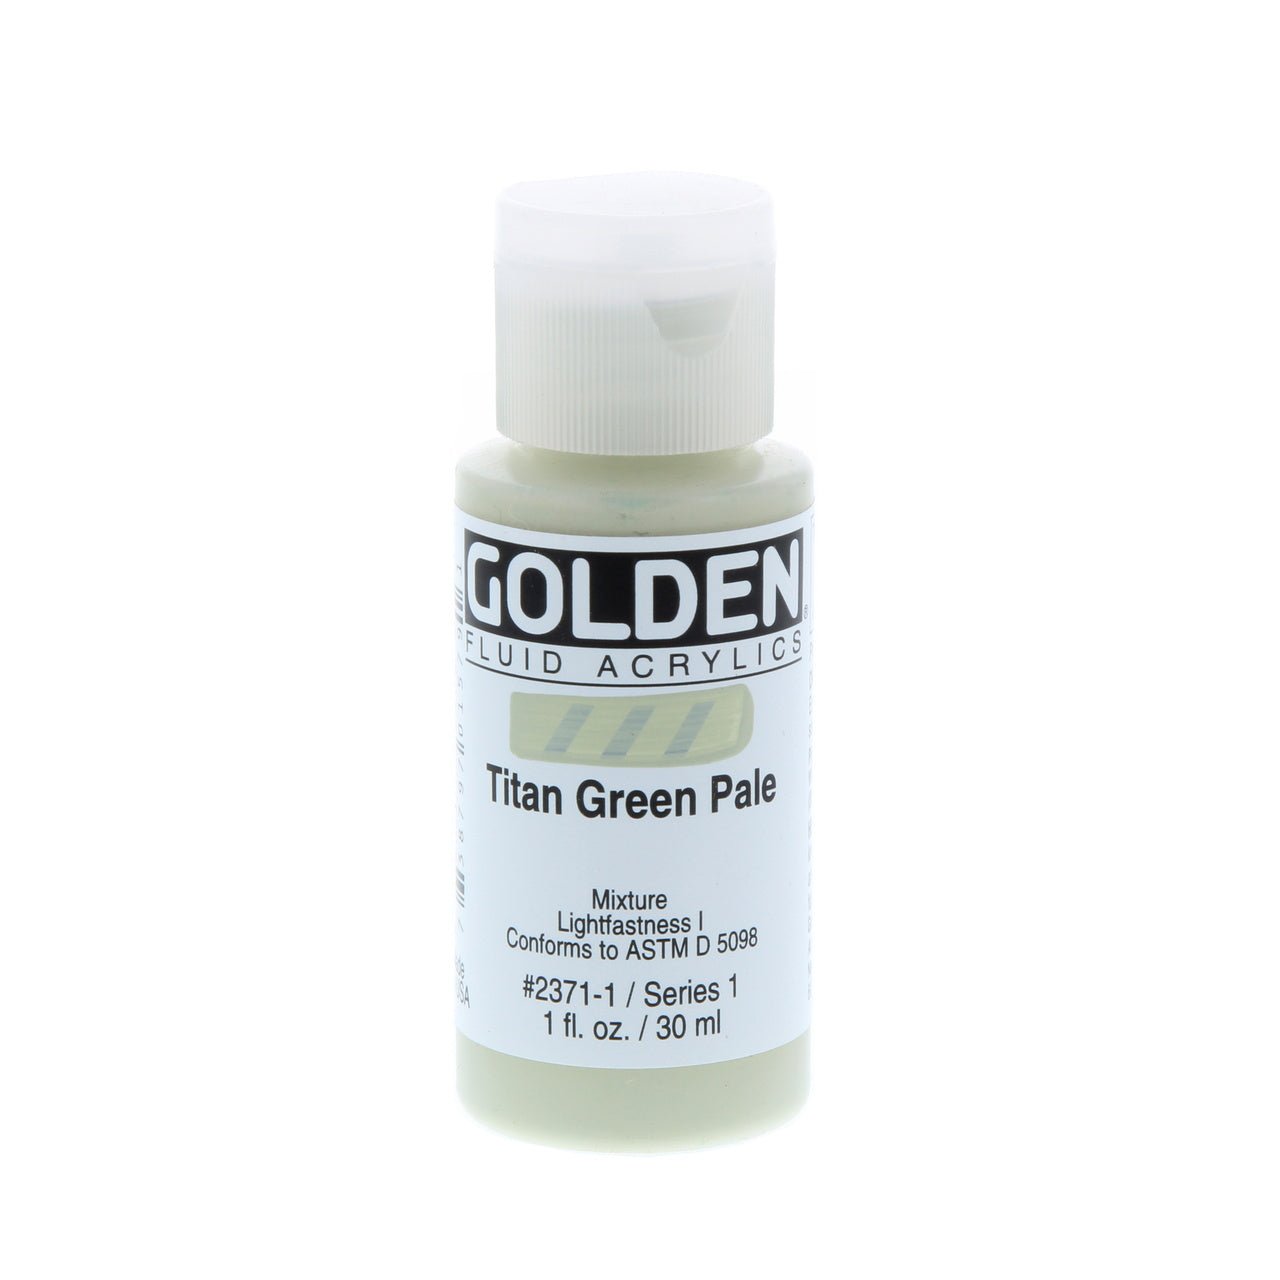 Golden Fluid Acrylic Titan Green Pale 1 oz - merriartist.com